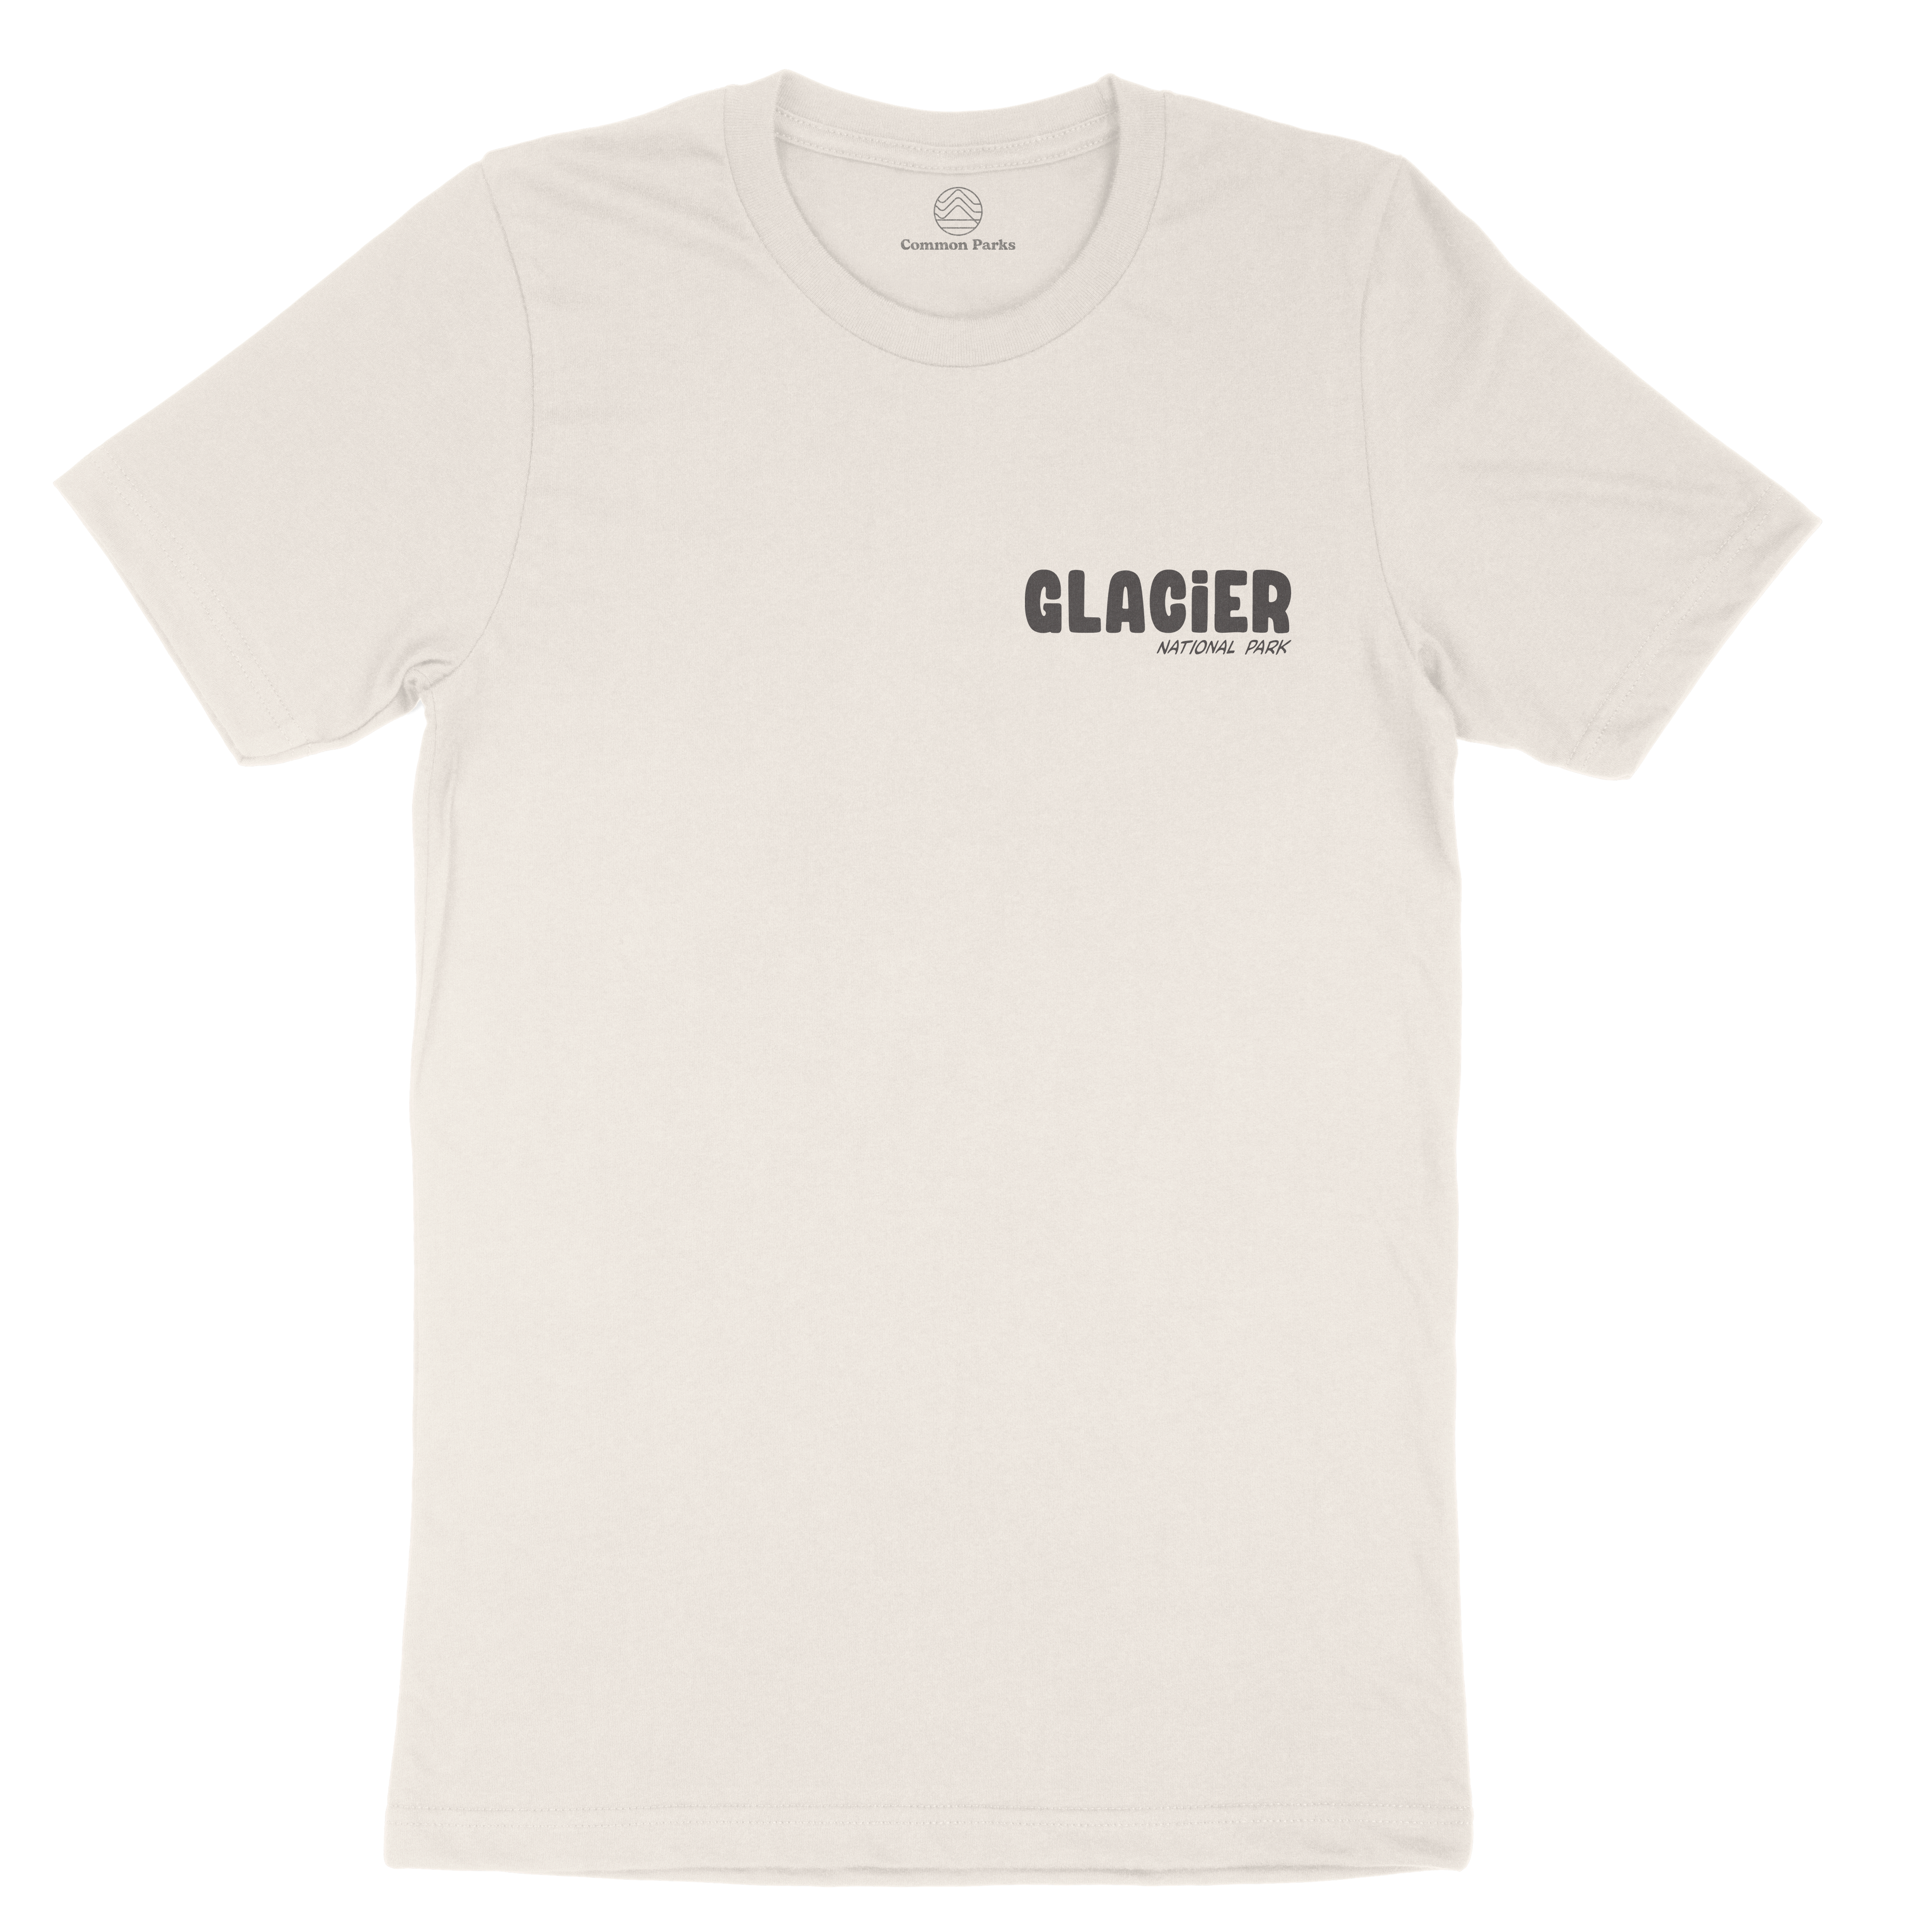 glacier tshirt